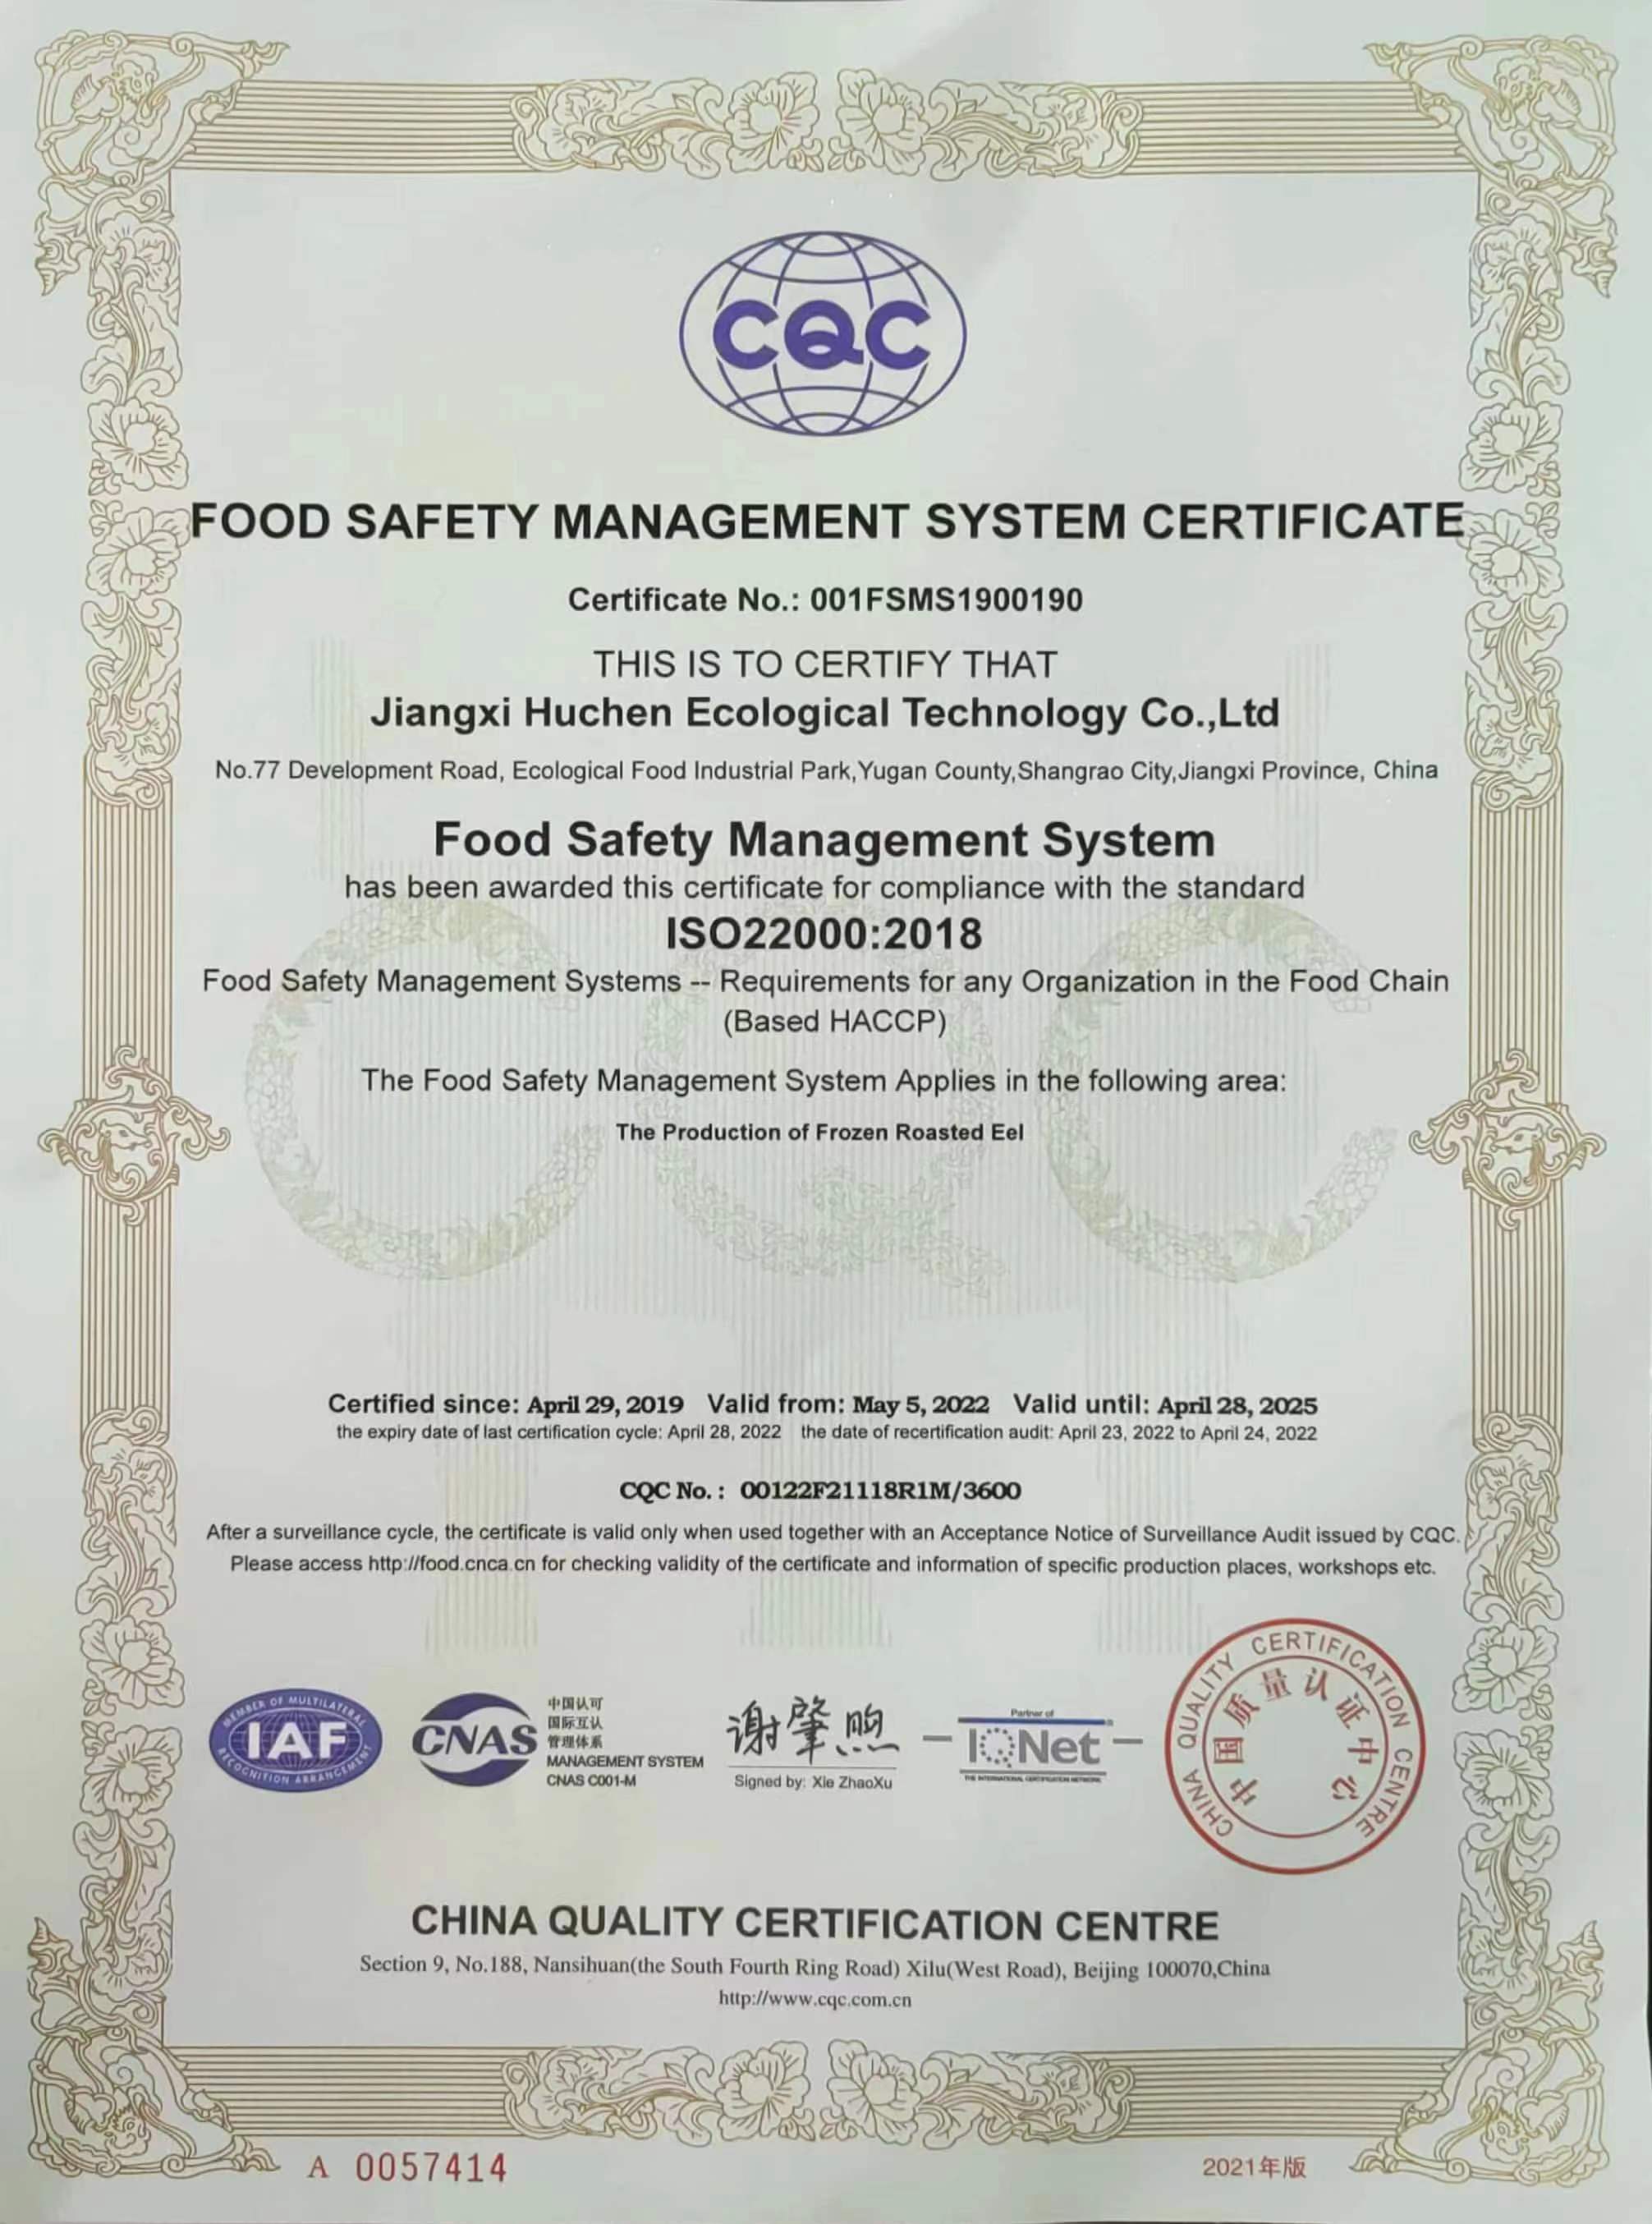 Food Safety Management System ntawv pov thawj